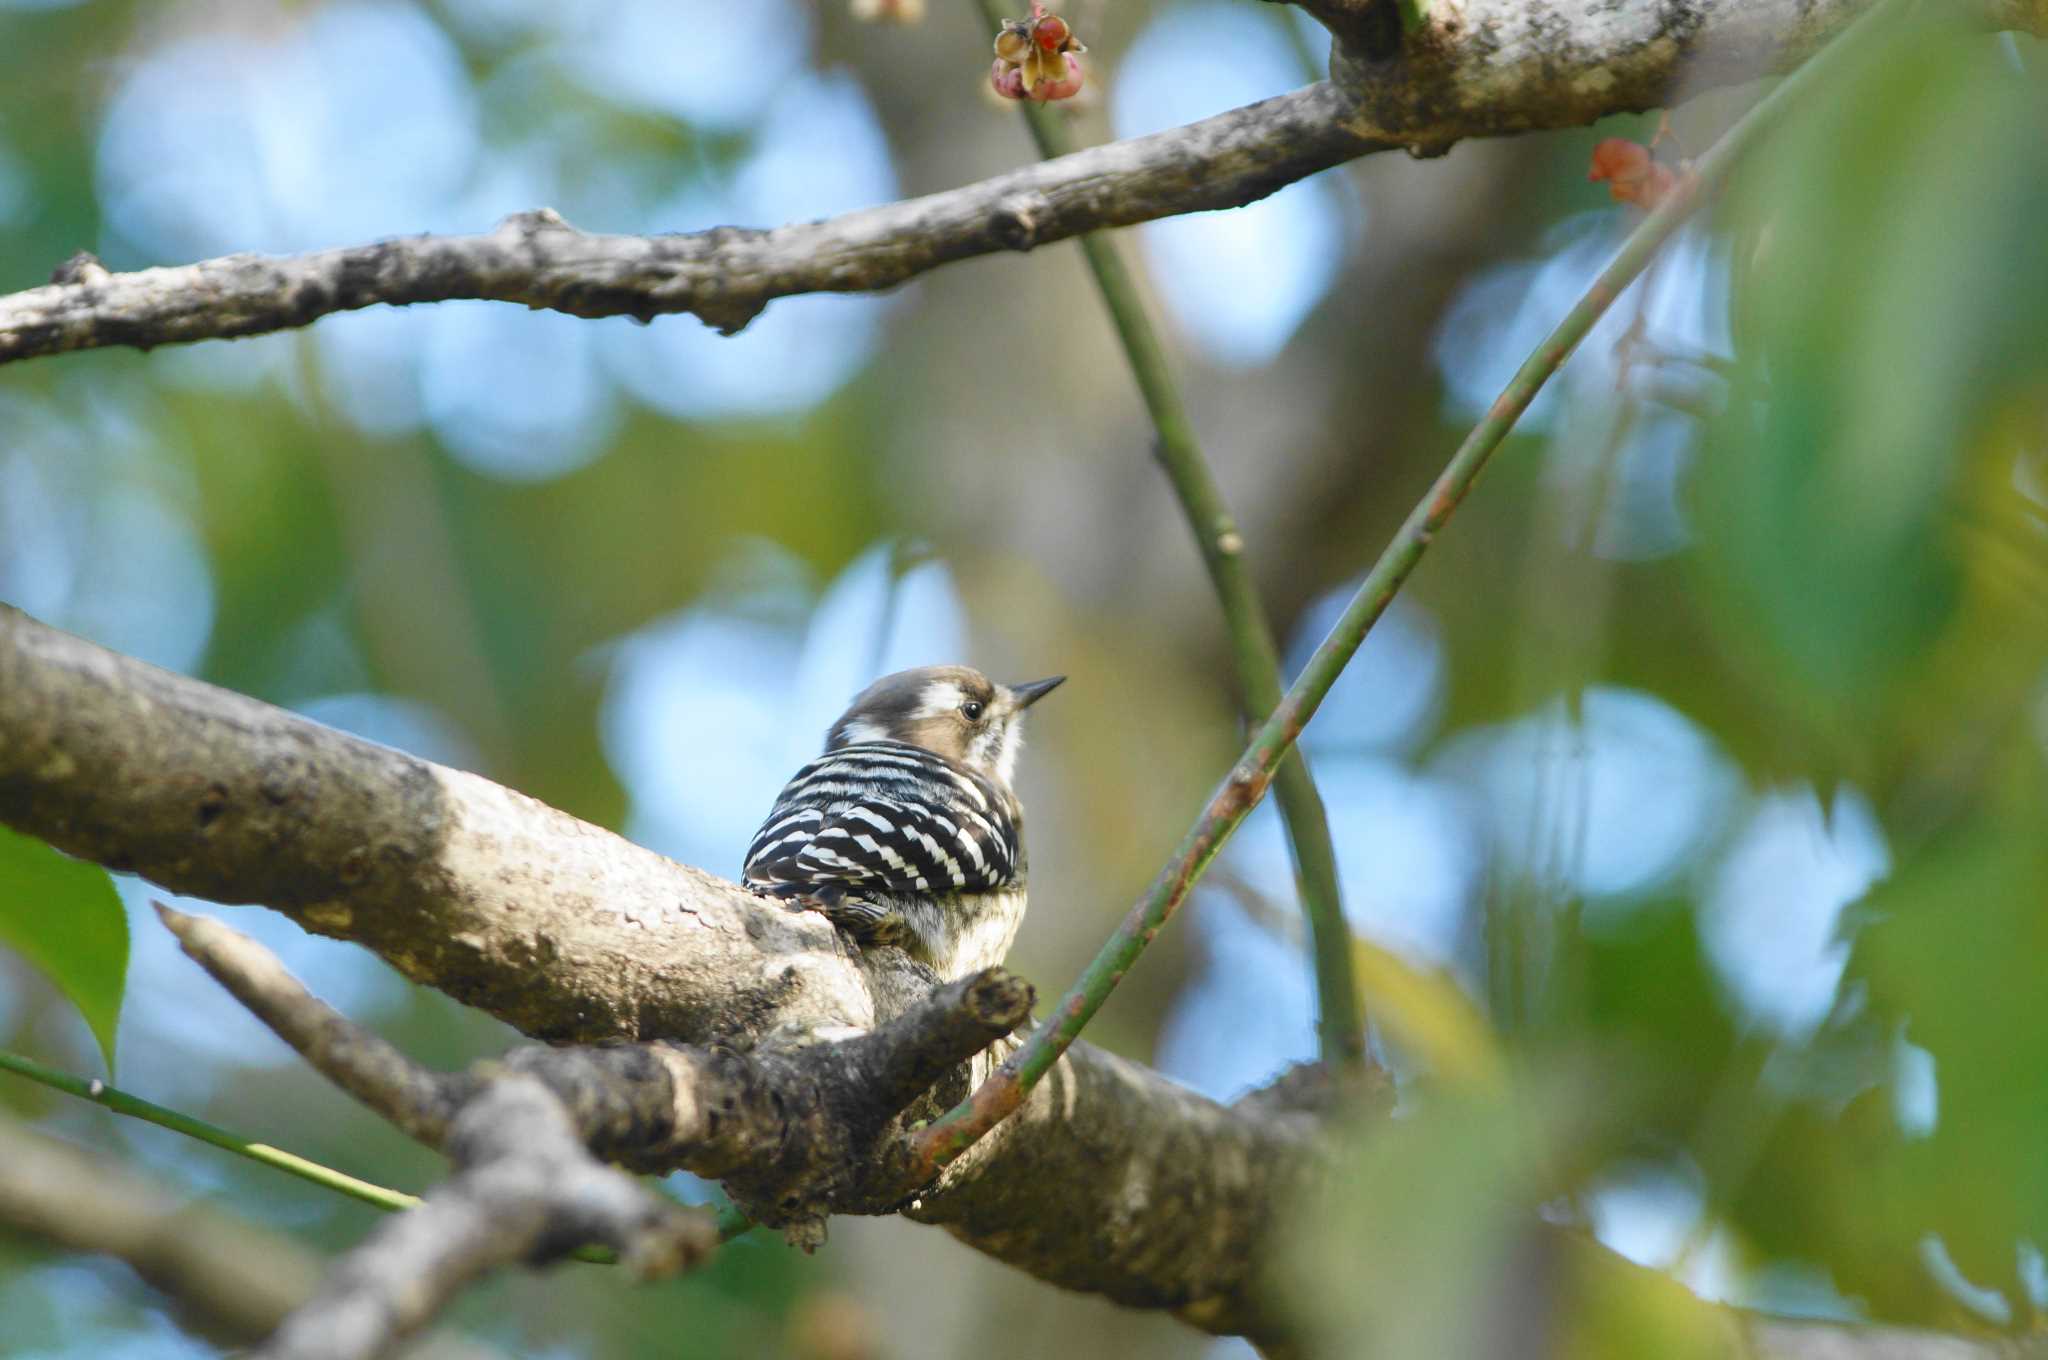 Photo of Japanese Pygmy Woodpecker at 世田谷区の公園 by bea